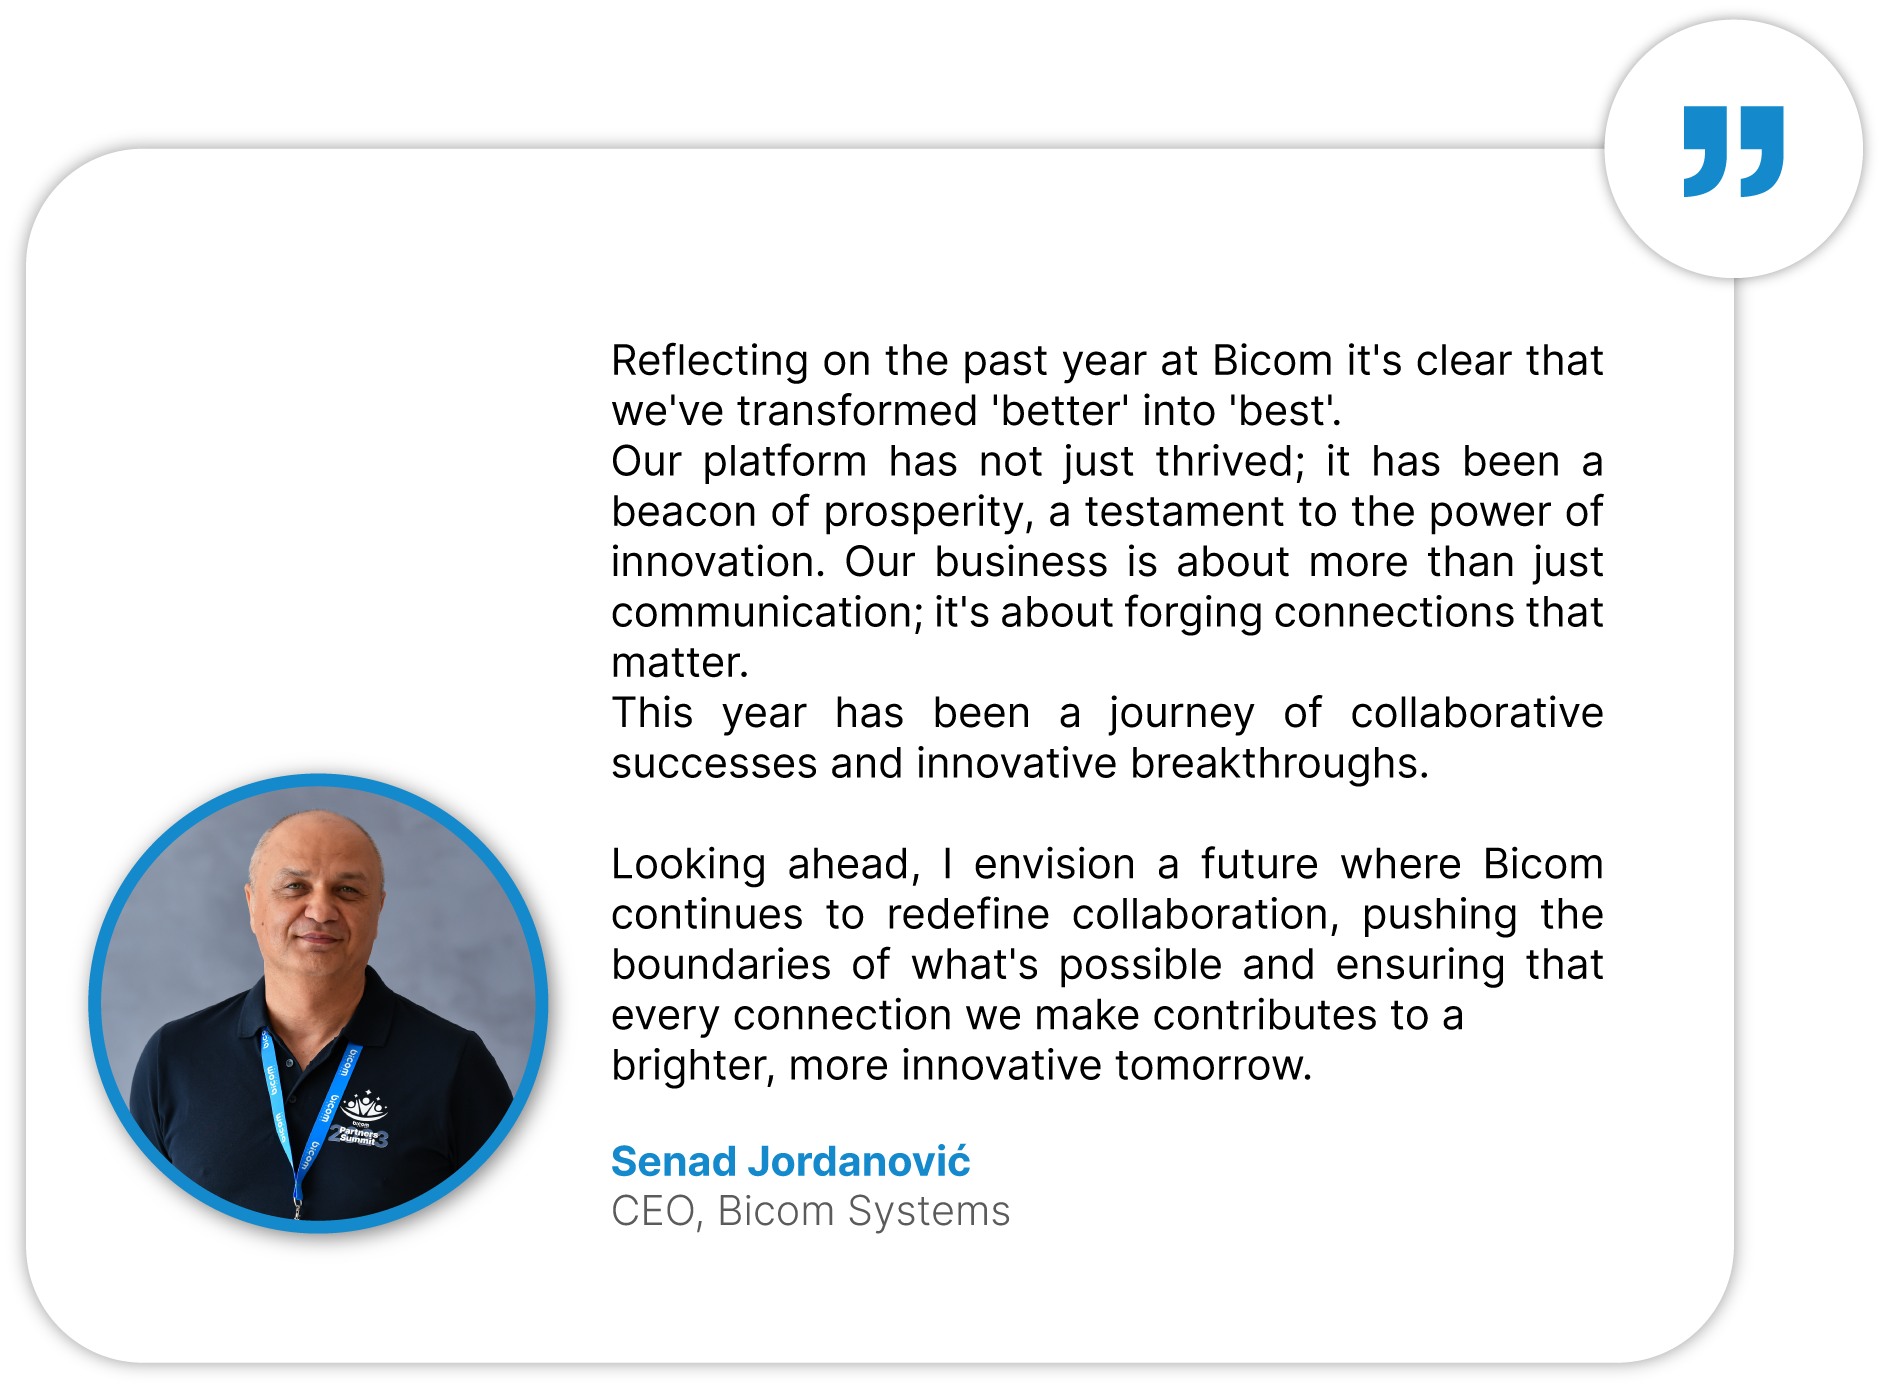 Senad Jordanovic, CEO of Bicom Systems quote